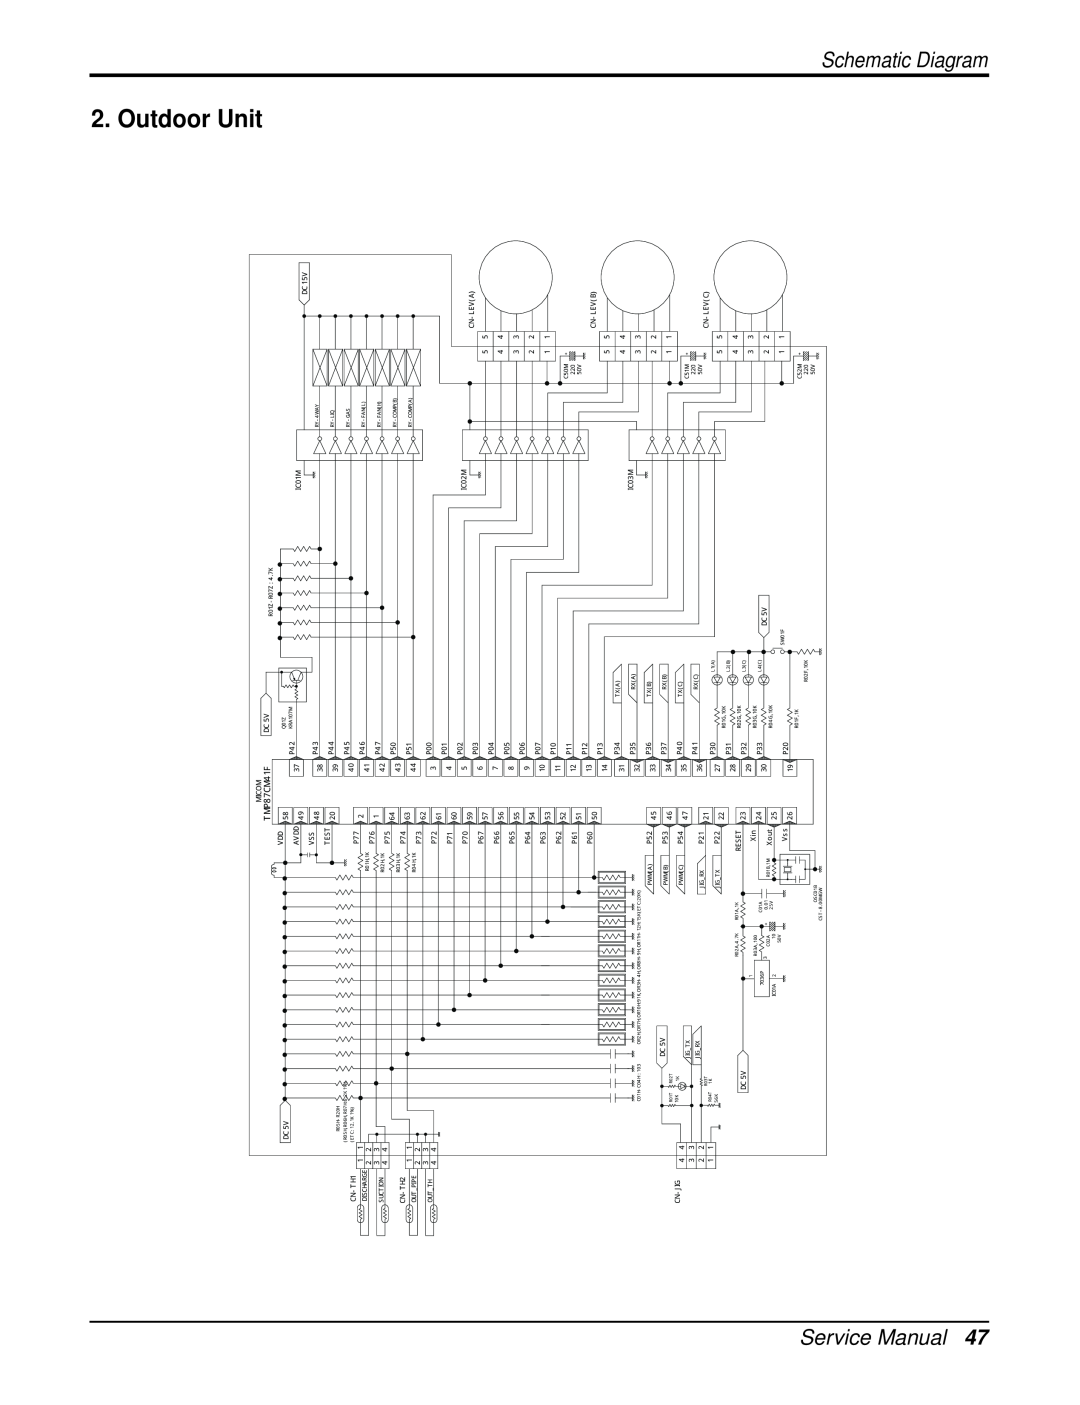 Heat Controller DMH18DB-1 manual Outdoor Unit, Service Manual, Schematic Diagram, TMP87CM41F 